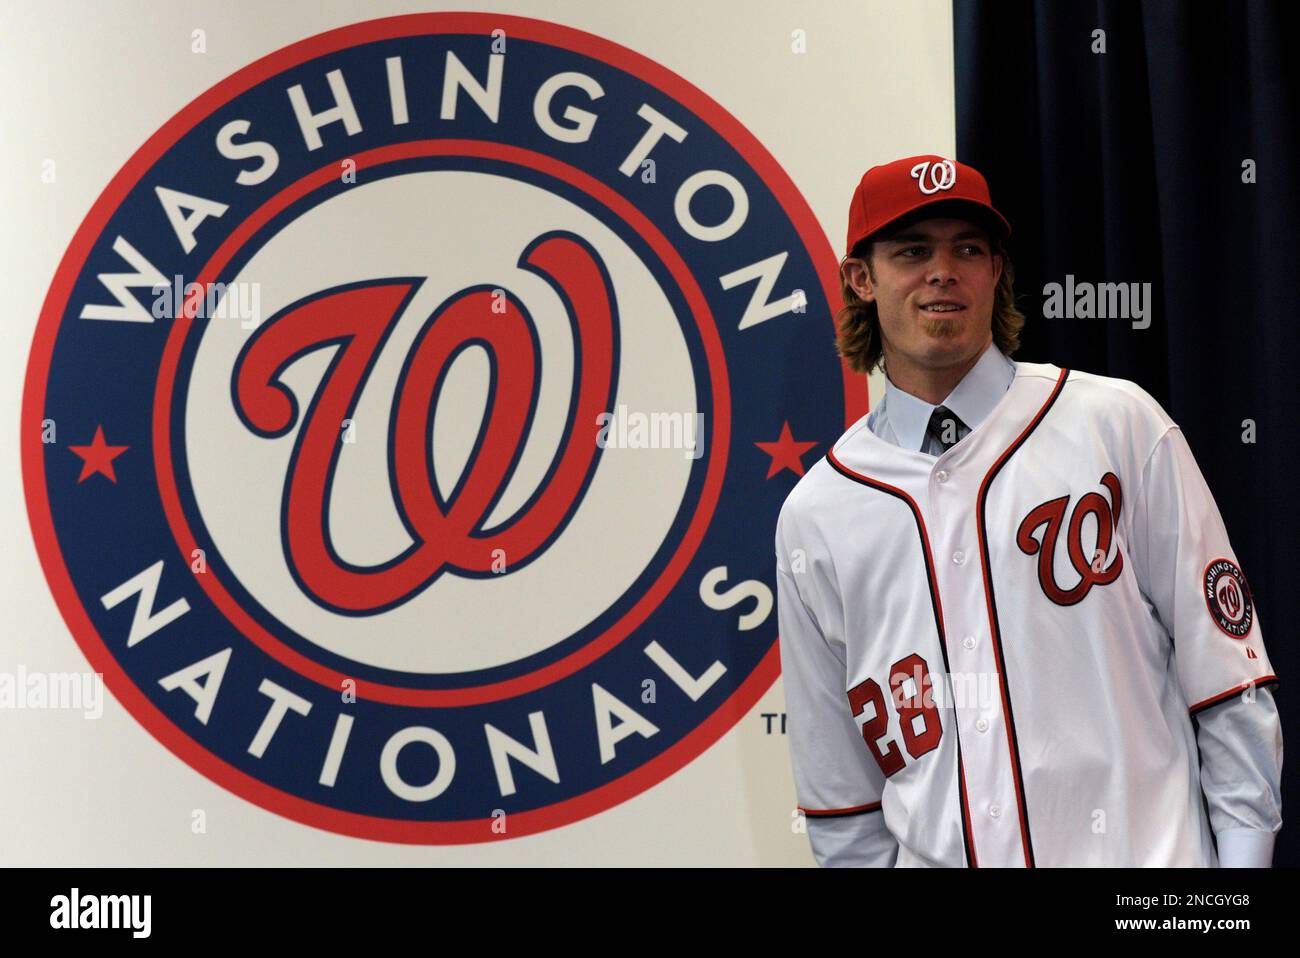 The Washington Nationals newest outfielder Jason Werth wears his